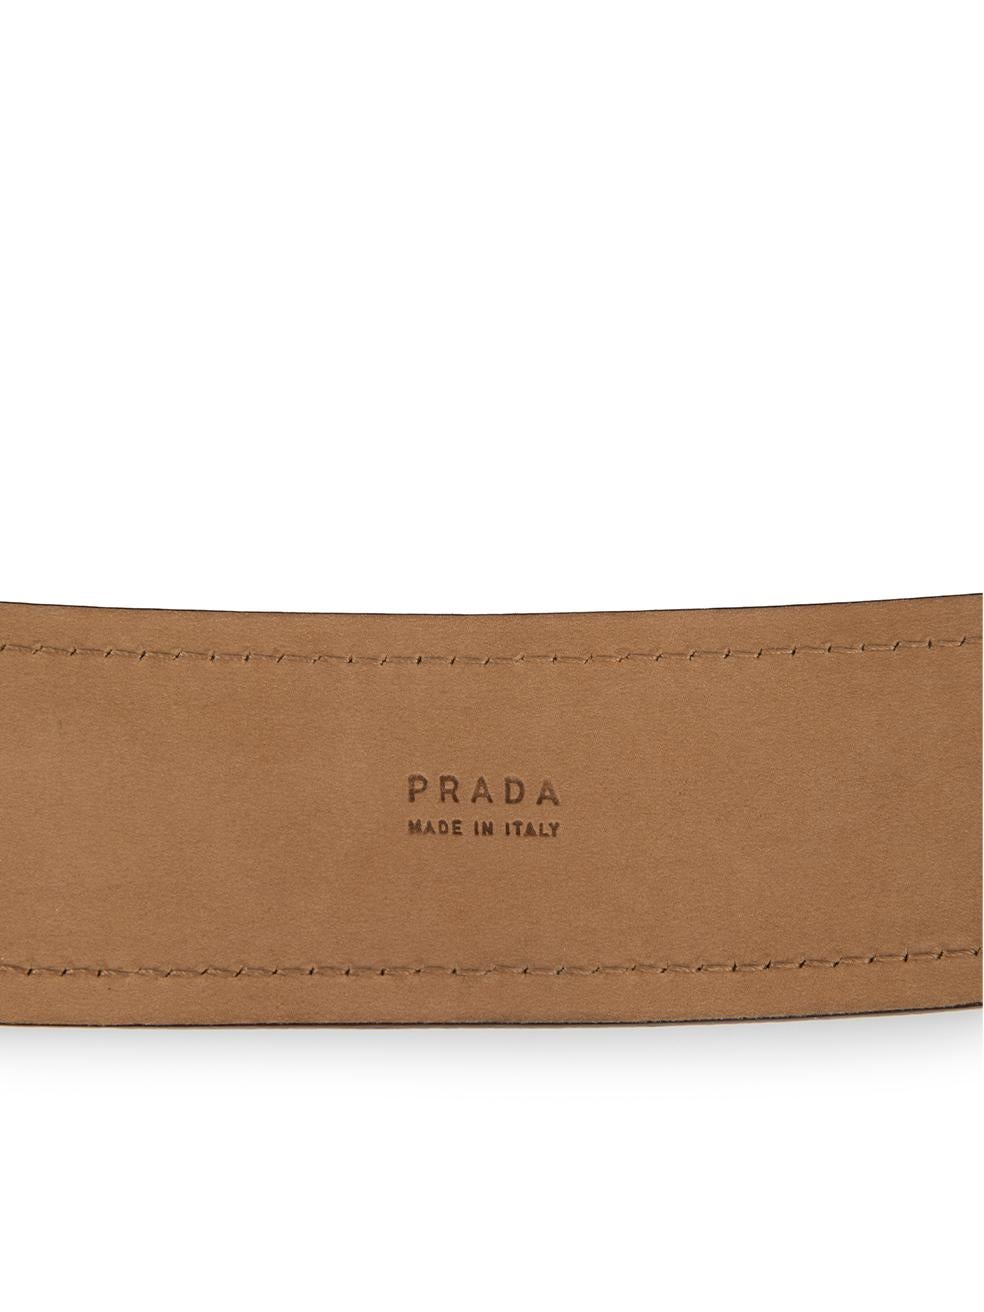 Prada Women's Gold Leather Metallic Belt For Sale 3